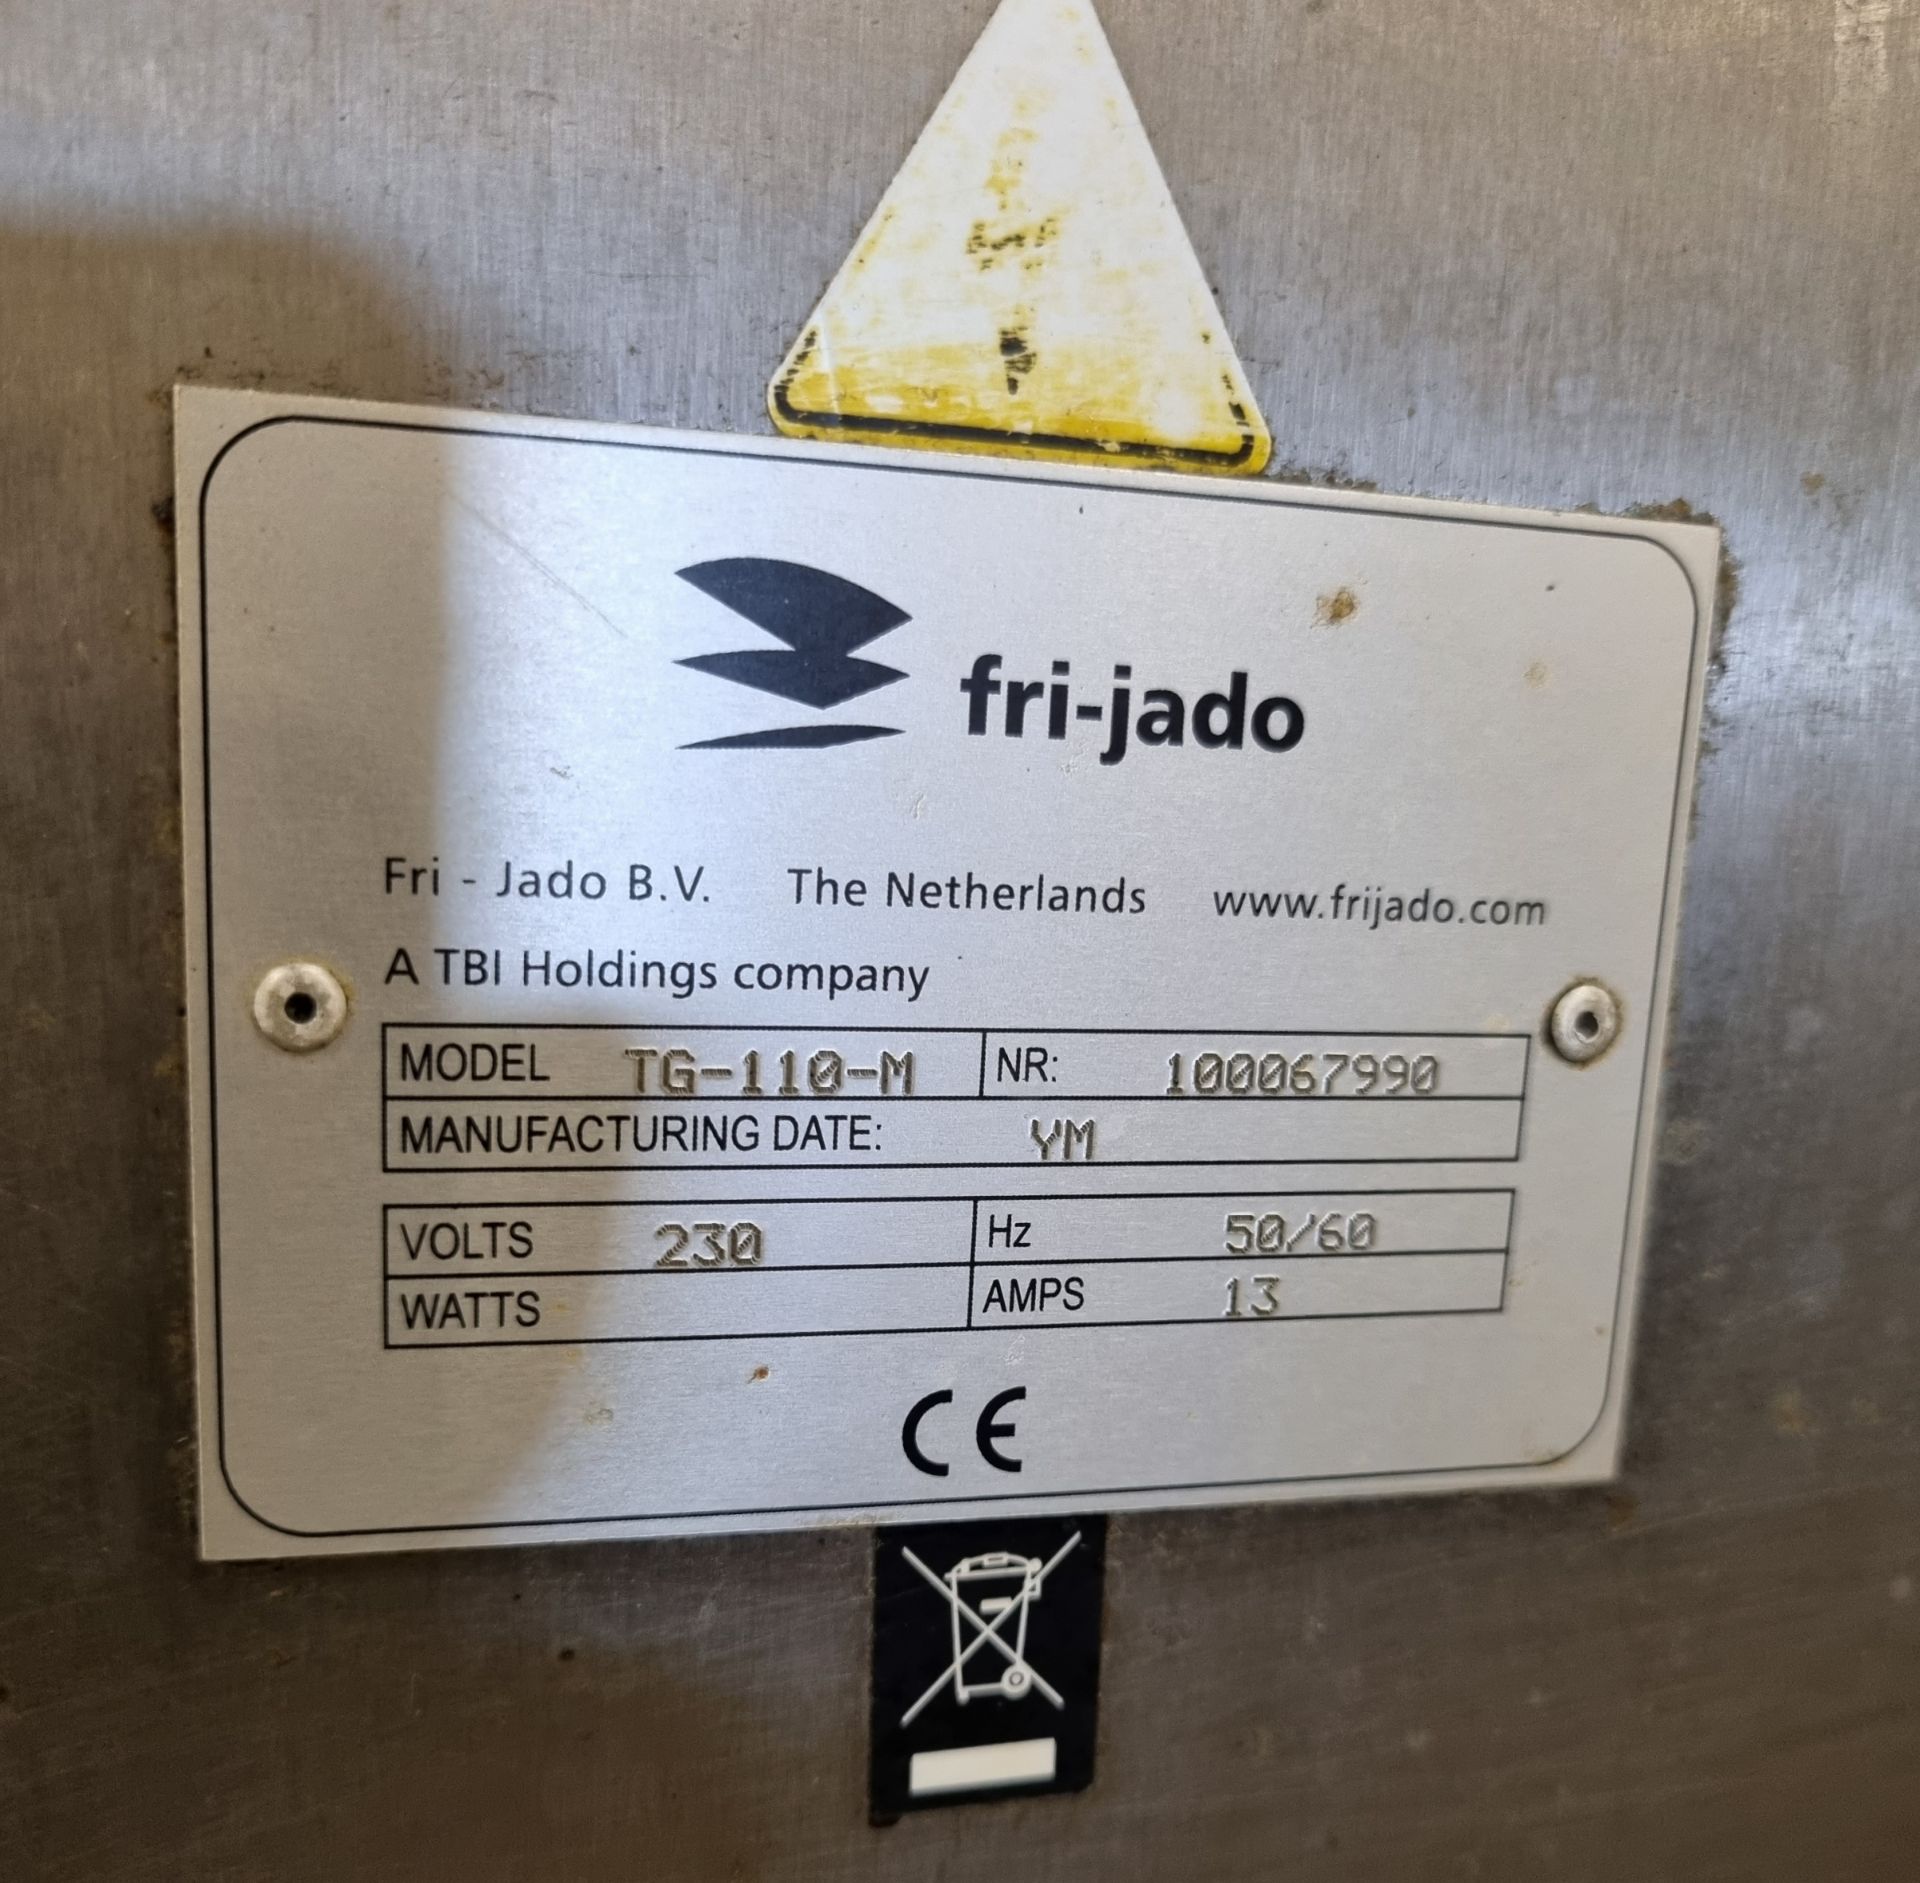 2x Fri-Jado TG110-M electric rotisserie ovens - 84x55x75cm, Stainless steel trolley - 91x65x107cm - Image 4 of 7